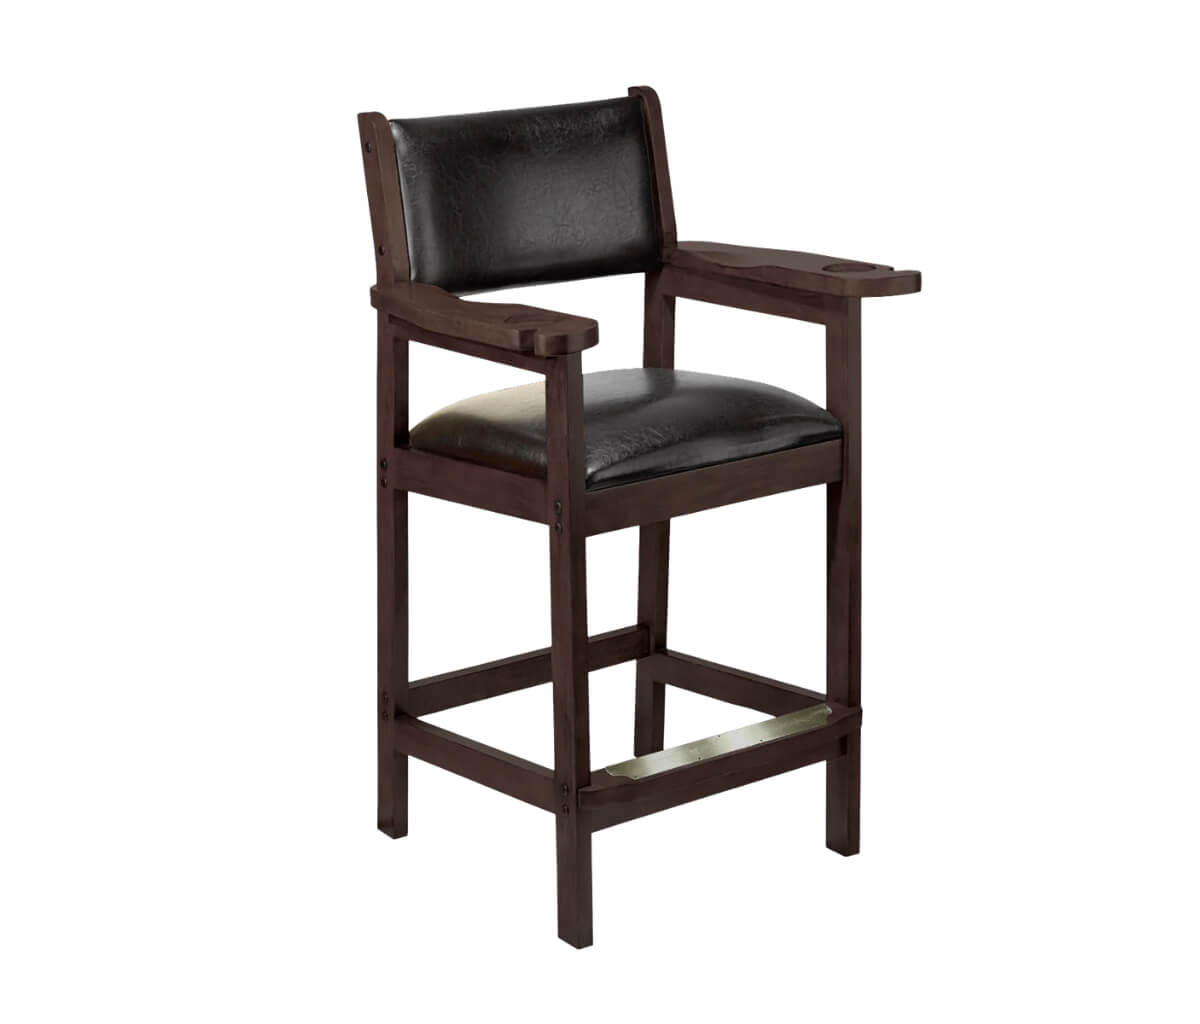 American Heritage SCD Spectator Chair Espresso 01.jpg